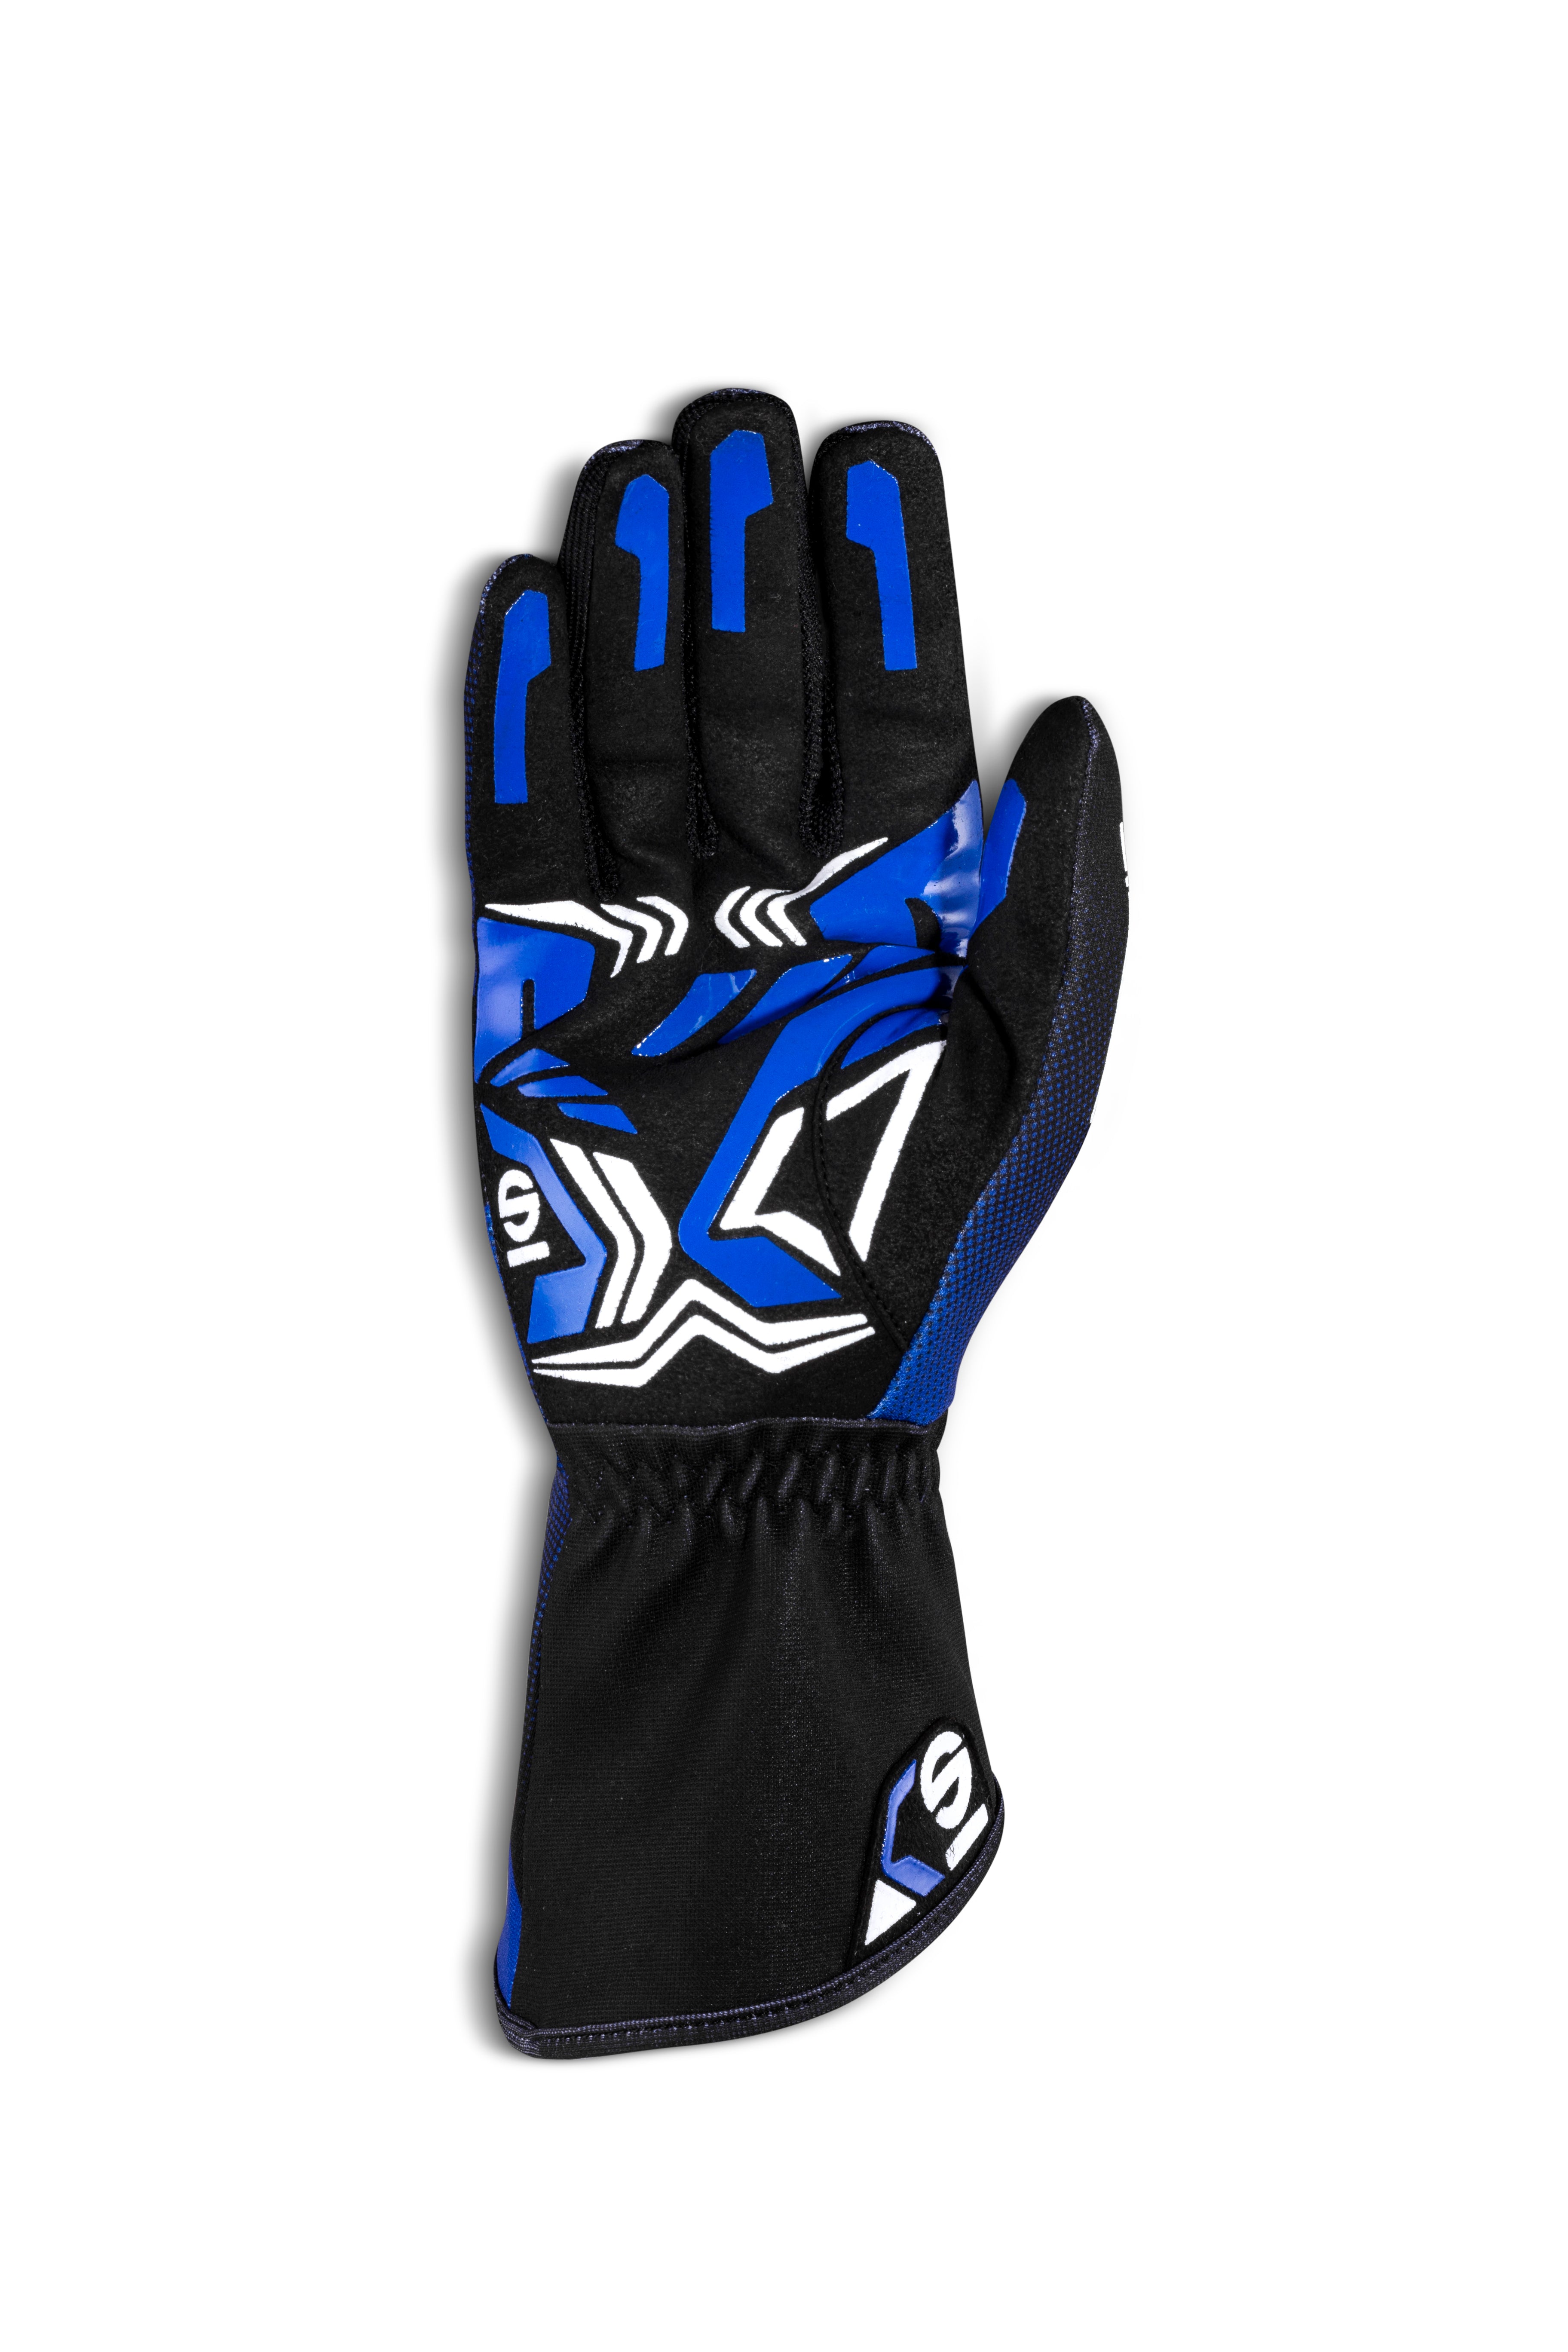 SPARCO 00255611BXNR Kart gloves RUSH, blue/black, size 11 Photo-1 